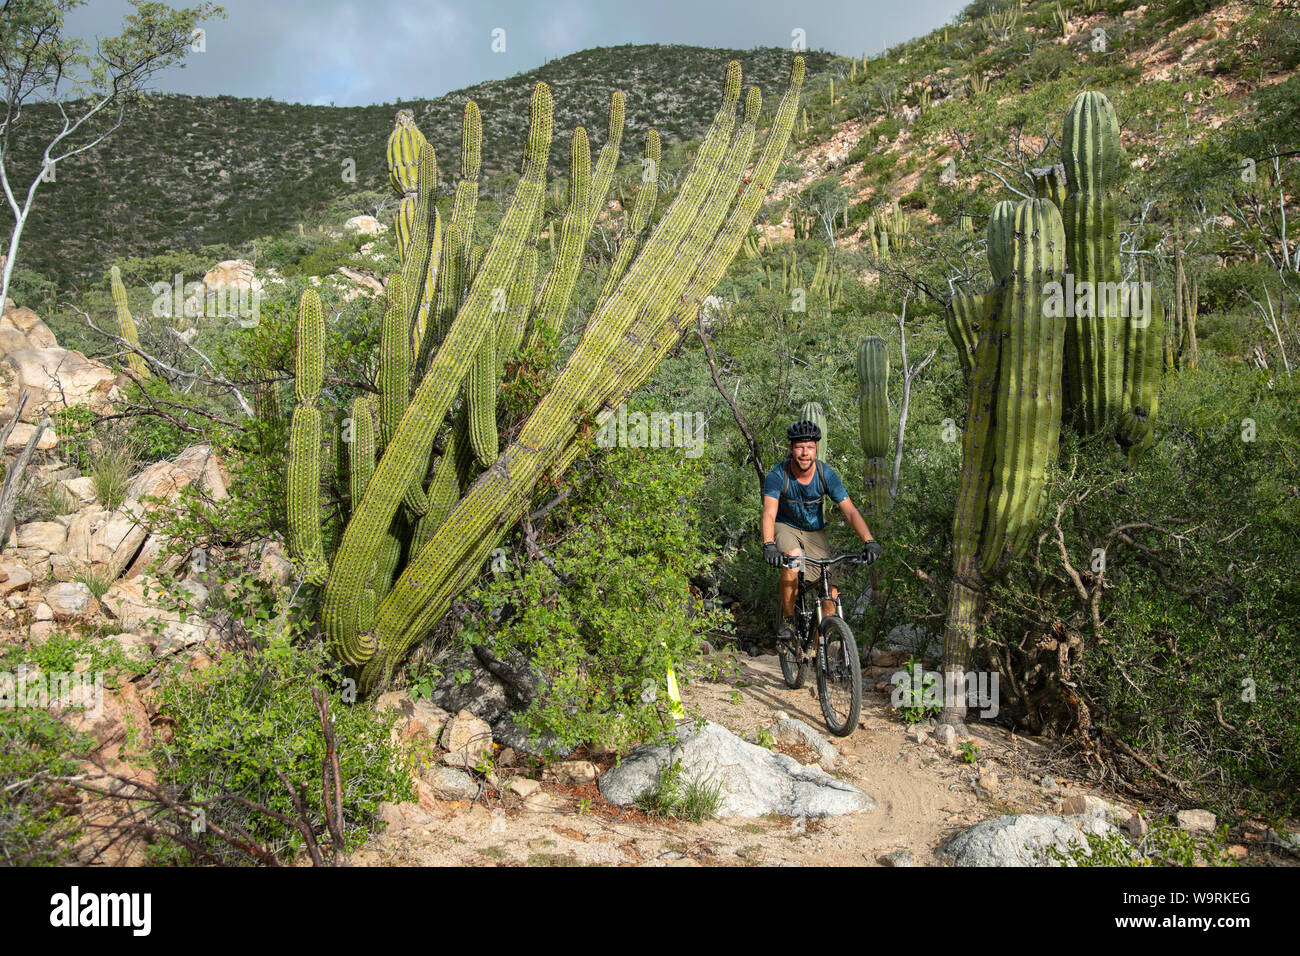 Central America, Mexico, Baja California, Mexican, El Sargento, La Ventana, Desert Mountain Biking MR 0630 *** Local Caption *** Stock Photo